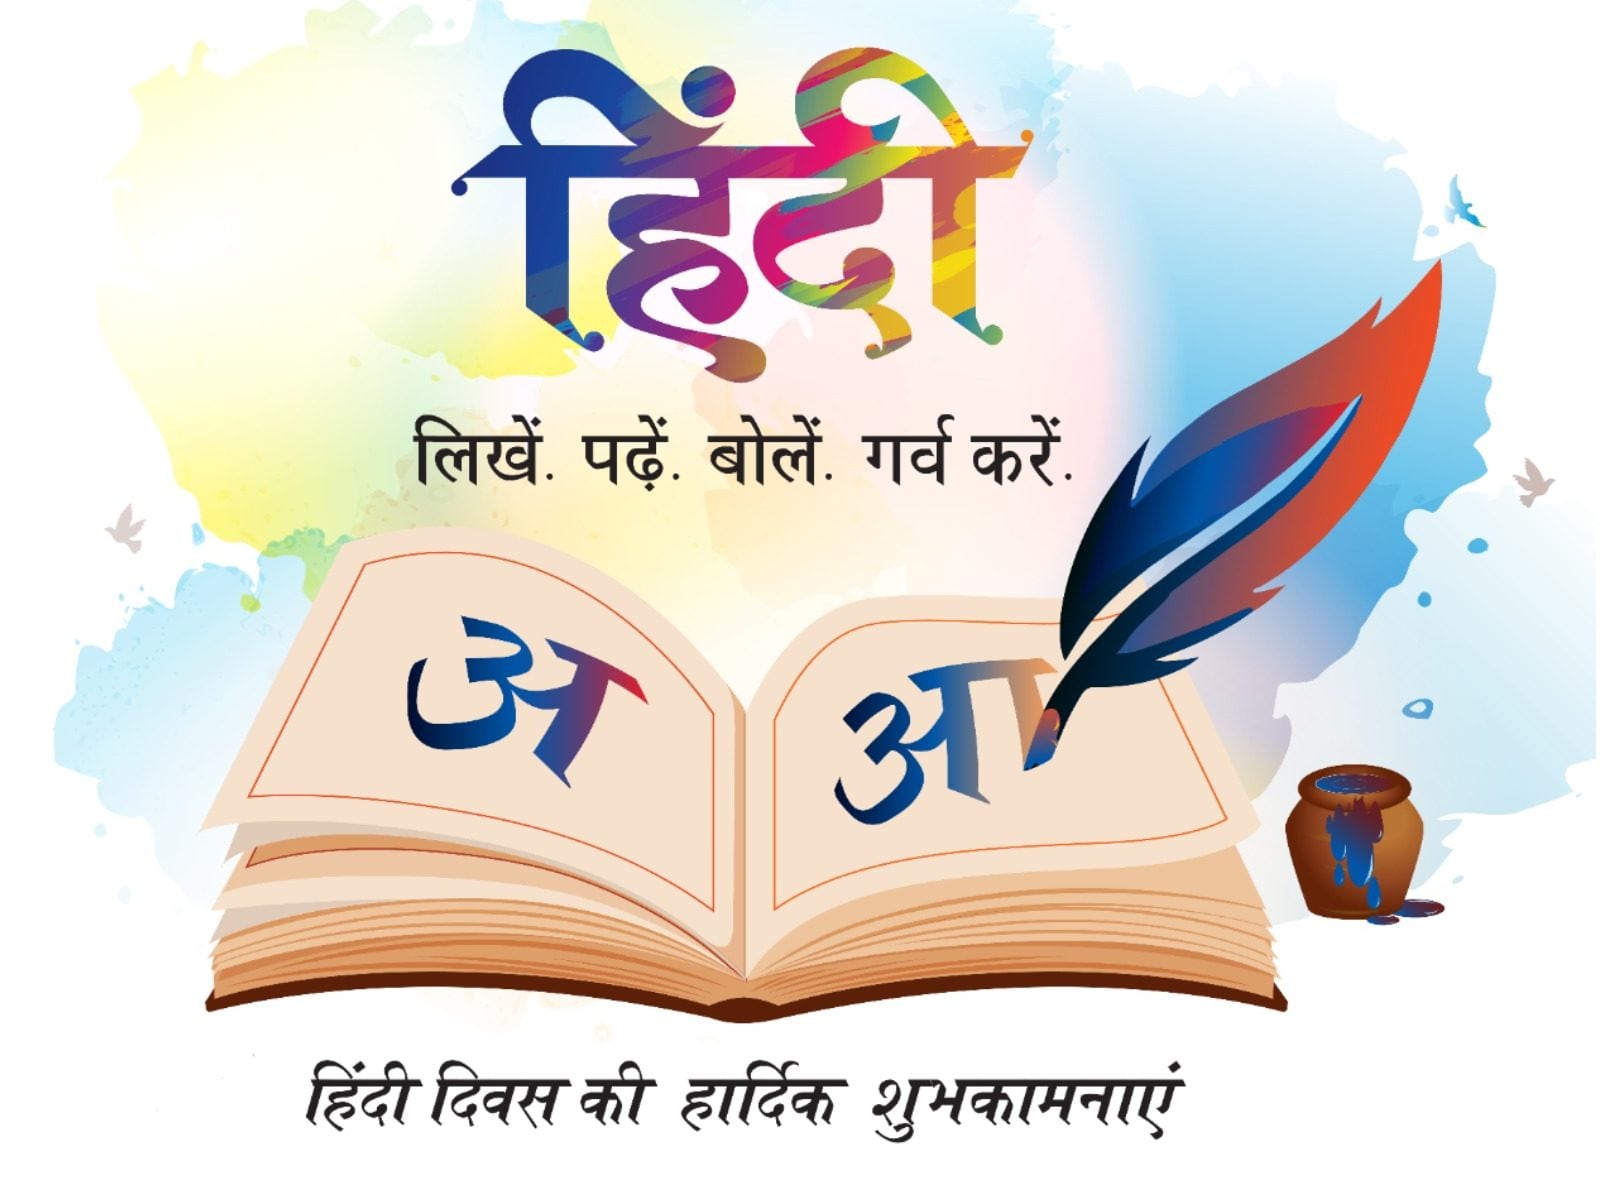 Hindi Diwas Drawing Easy | Hindi Diwas Poster | Hindi Diwas Chart/Poster  Making for competition | - YouTube